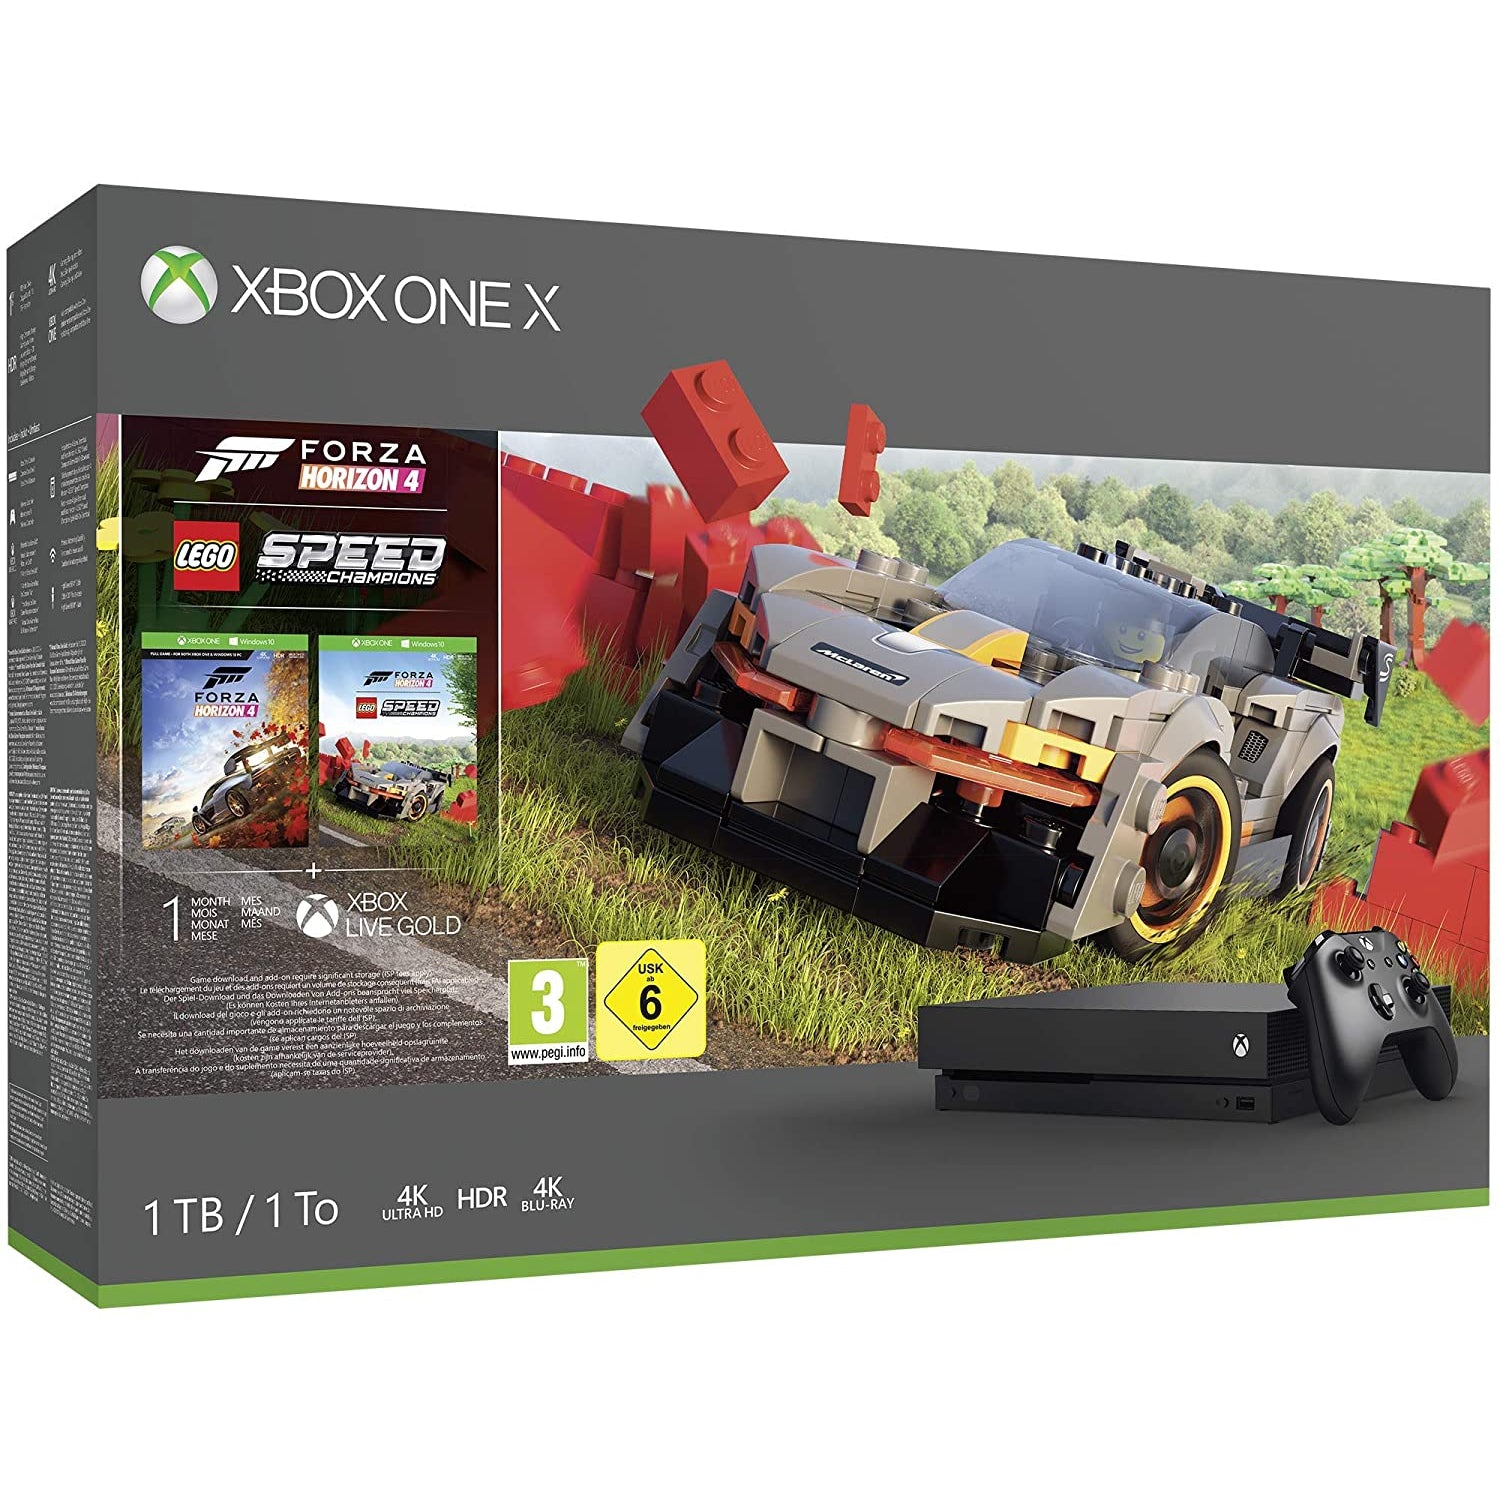 Xbox One X 1TB Forza Horizon 4 Lego Speed Champions Bundle